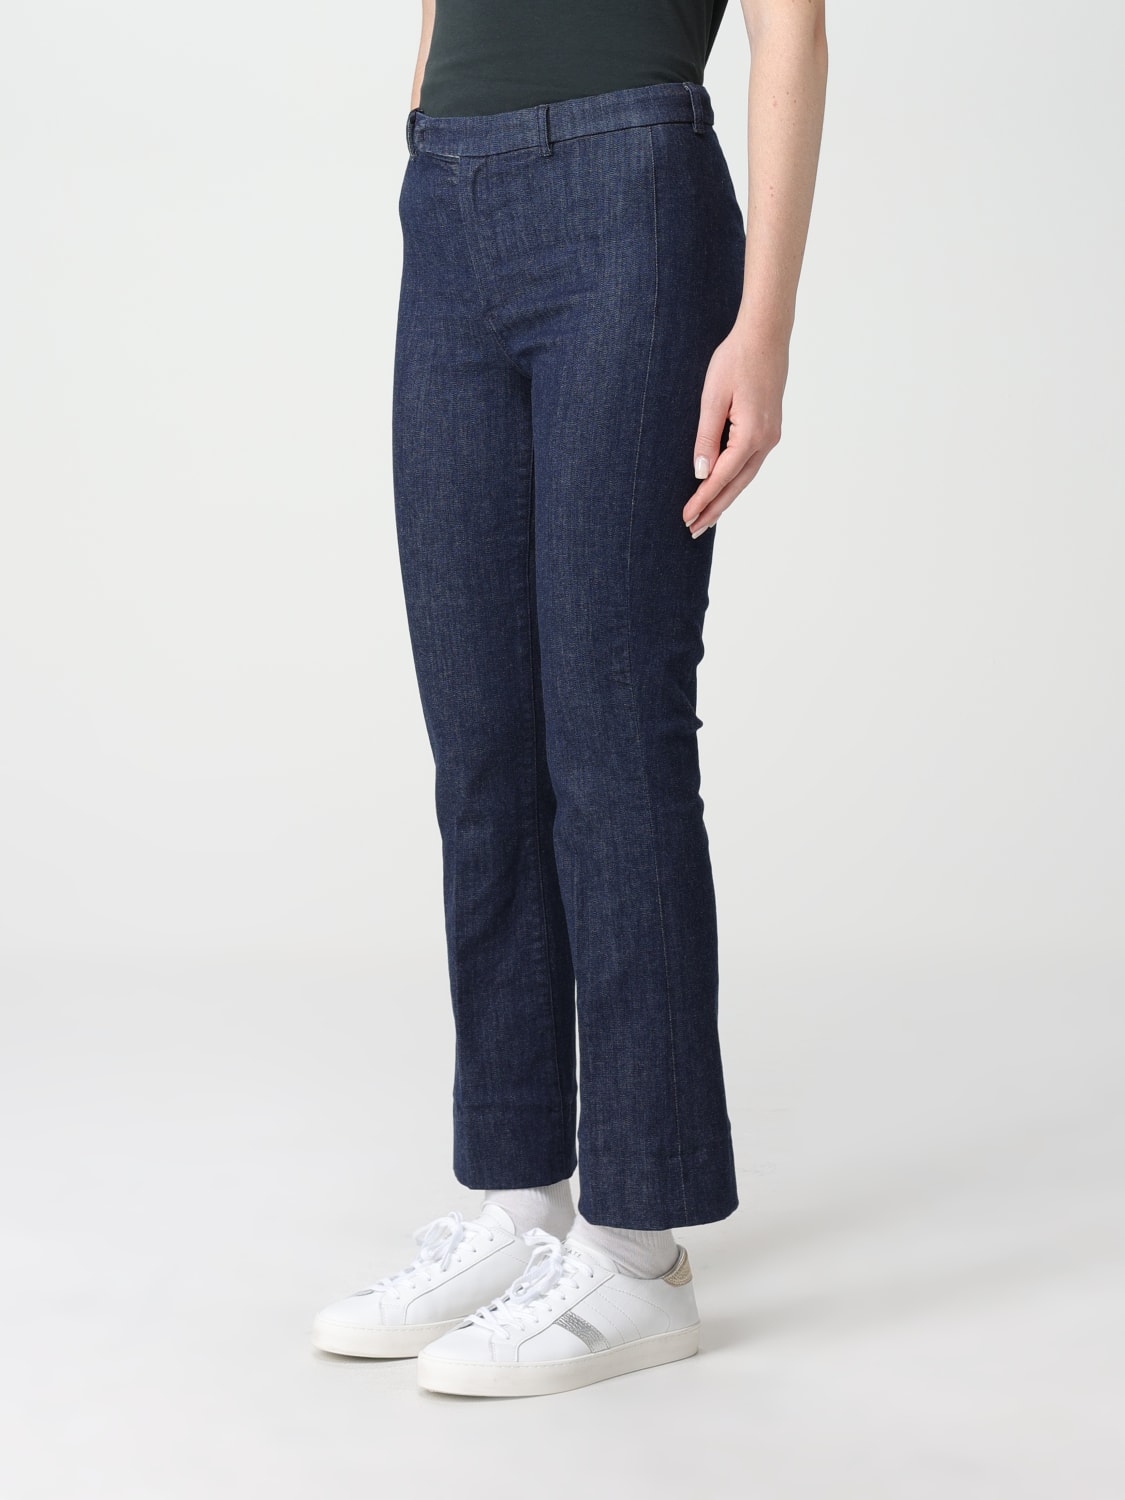 S MAX MARA: S Max Mara denim jeans - Navy | 'S Max Mara jeans